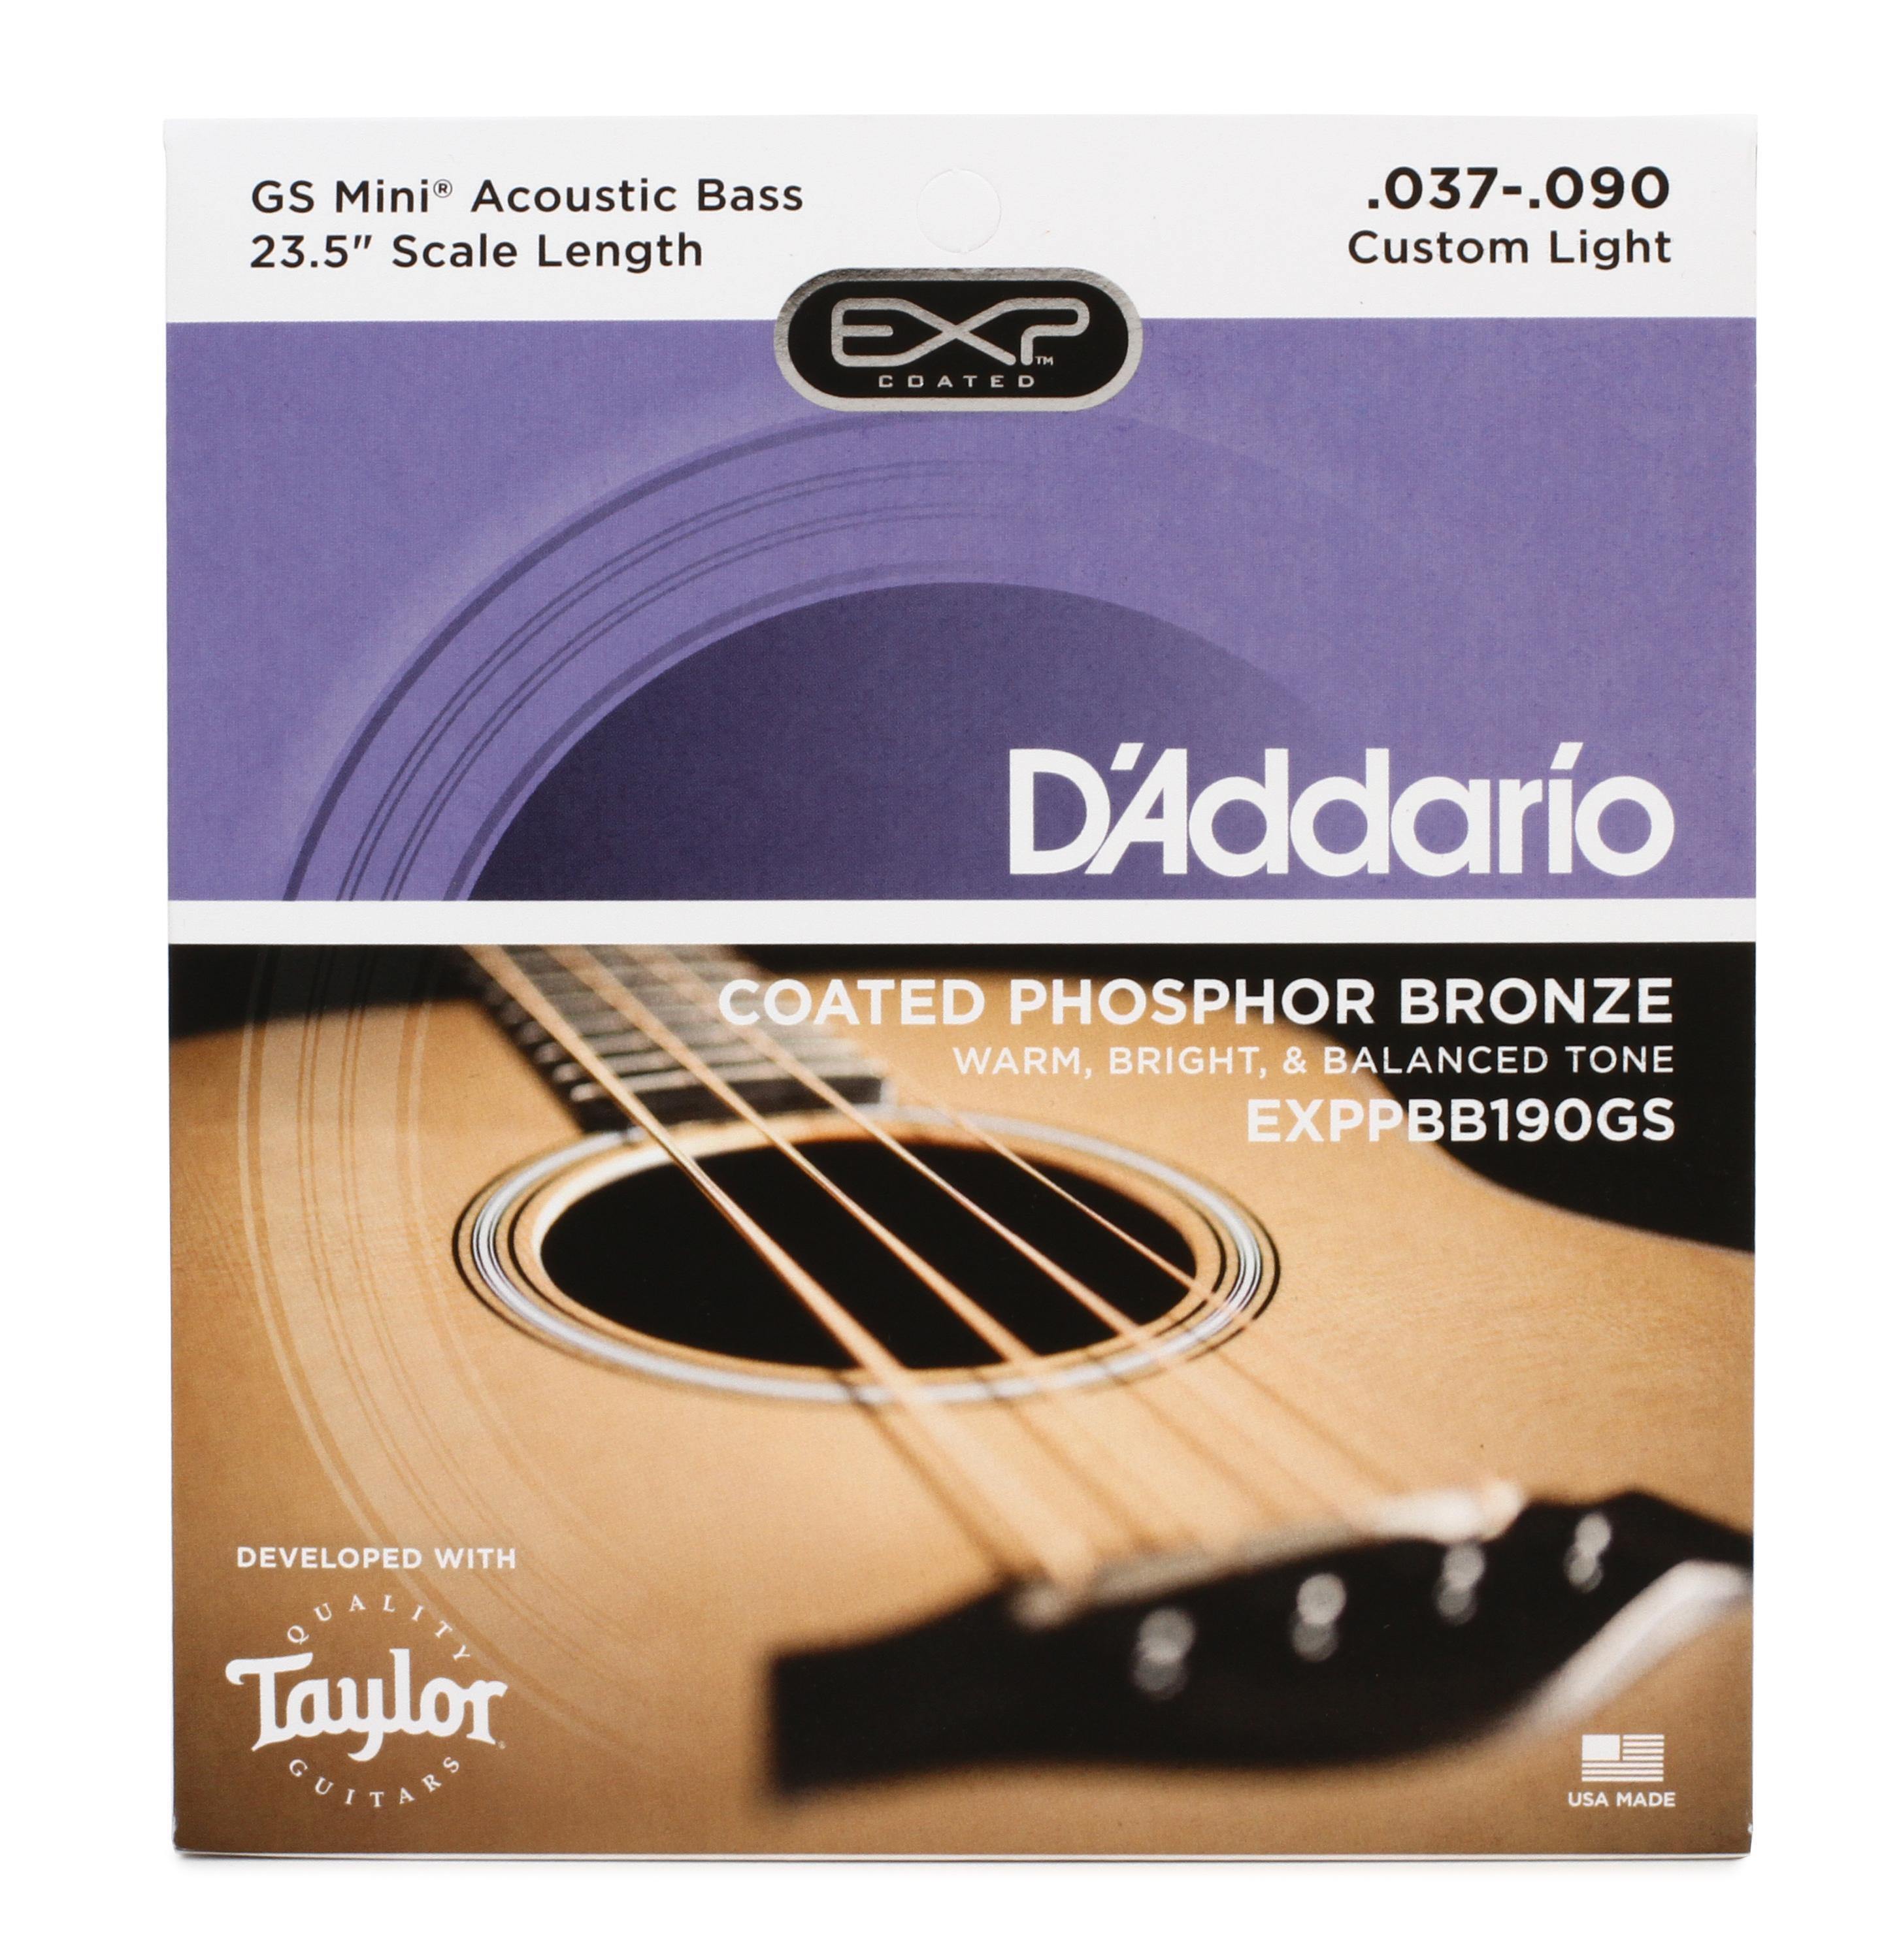 D'Addario EXPPBB190GS Taylor GS Mini Coated Phosphor Bronze Acoustic Bass  Guitar Strings - .037-.090 Custom Light 23.5 inch Scale